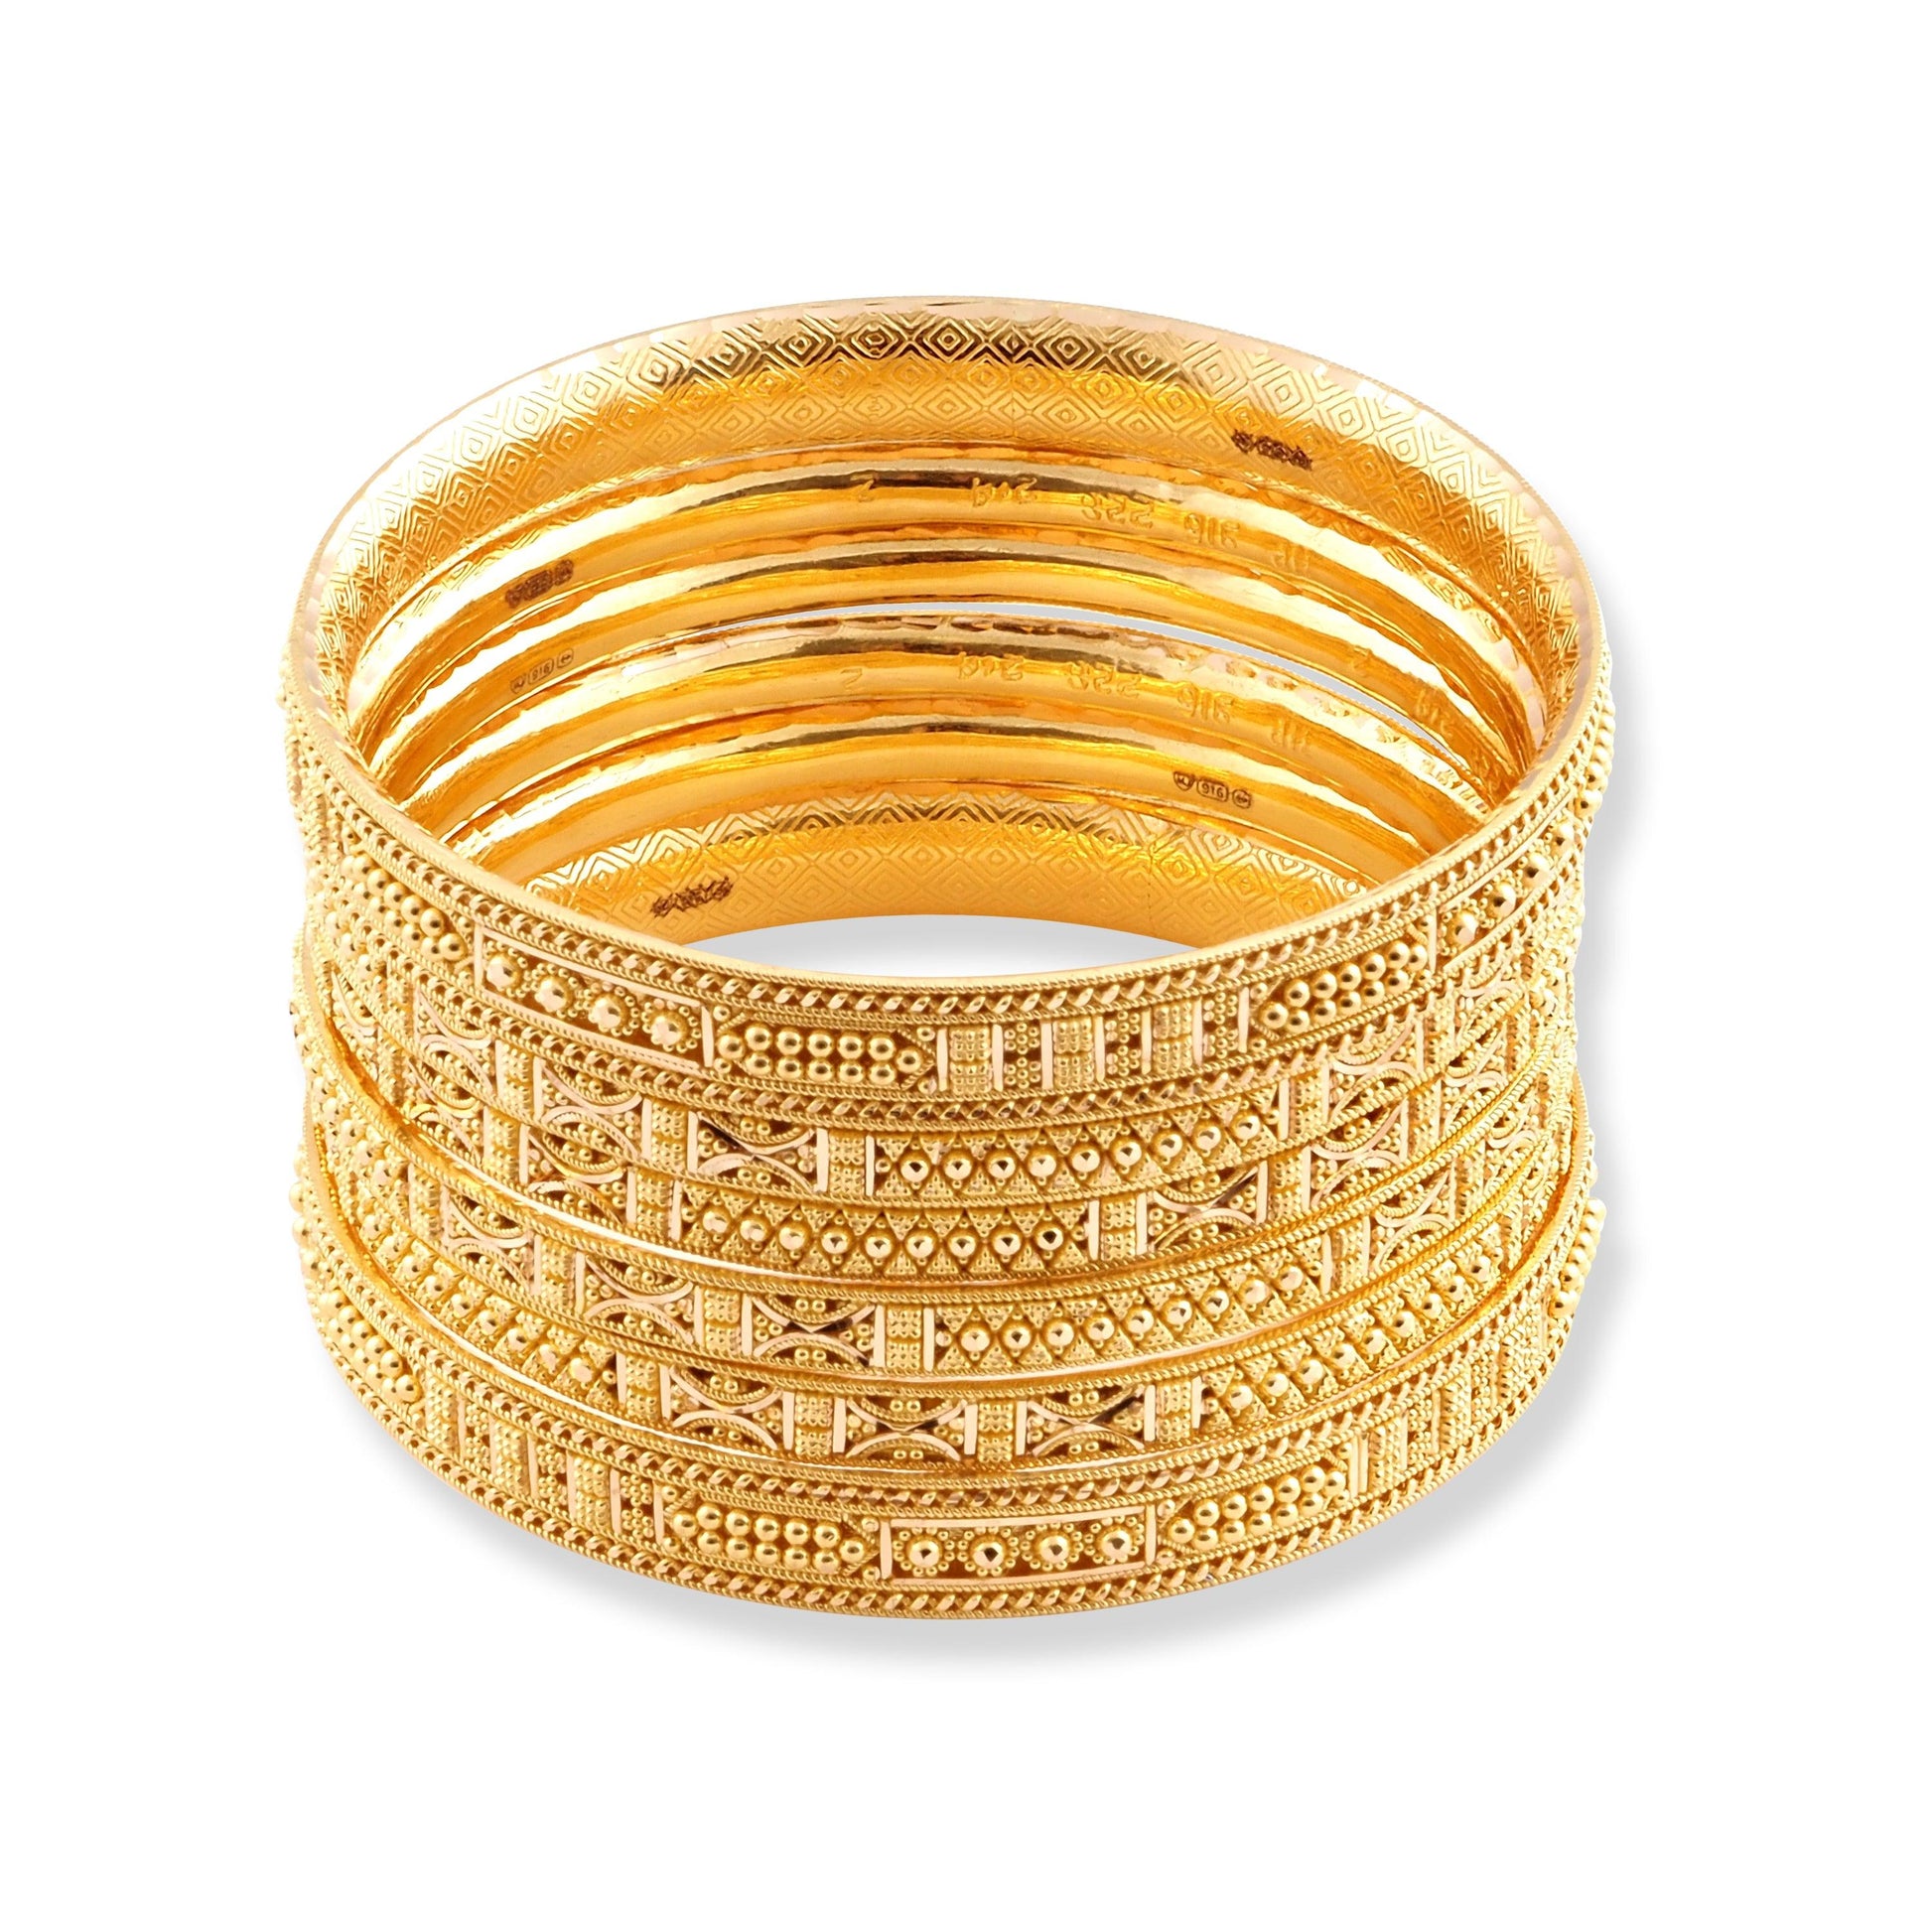 Set of Six 22ct Gold Bangles with Diamond Cut Design and Filigree Work B-8573 - Minar Jewellers